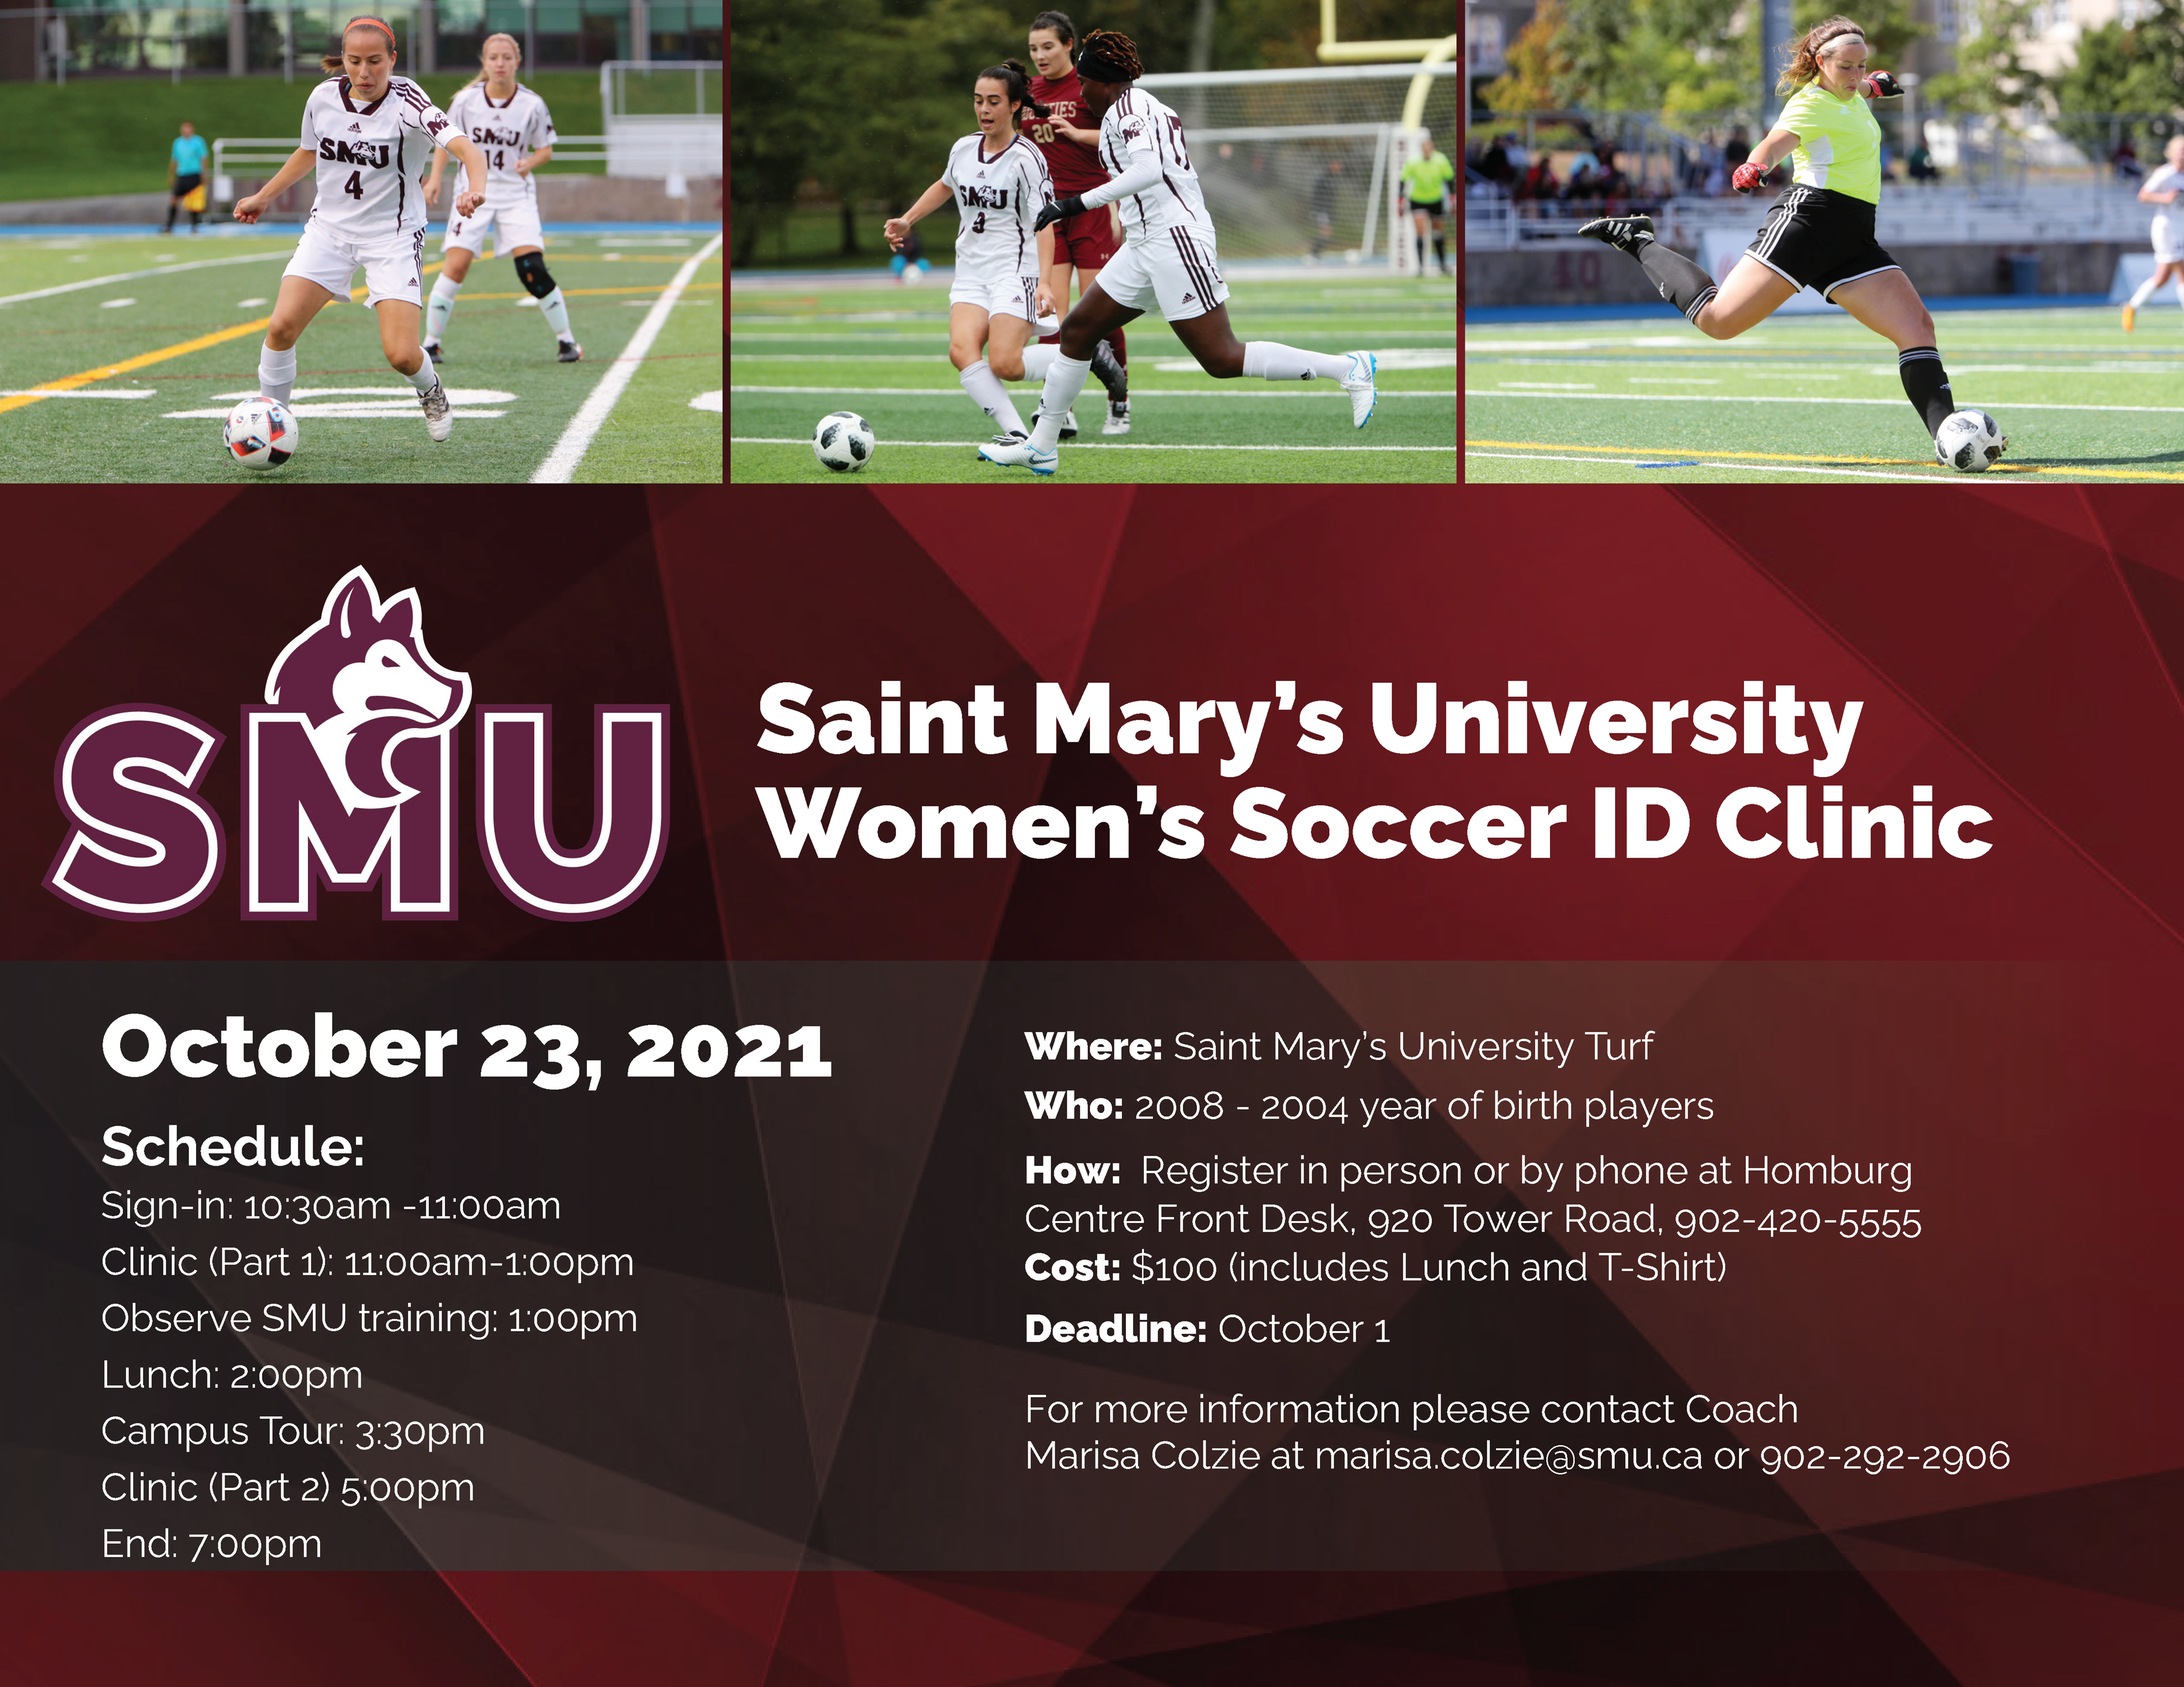 Saint Mary's University Women's Soccer ID Clinic